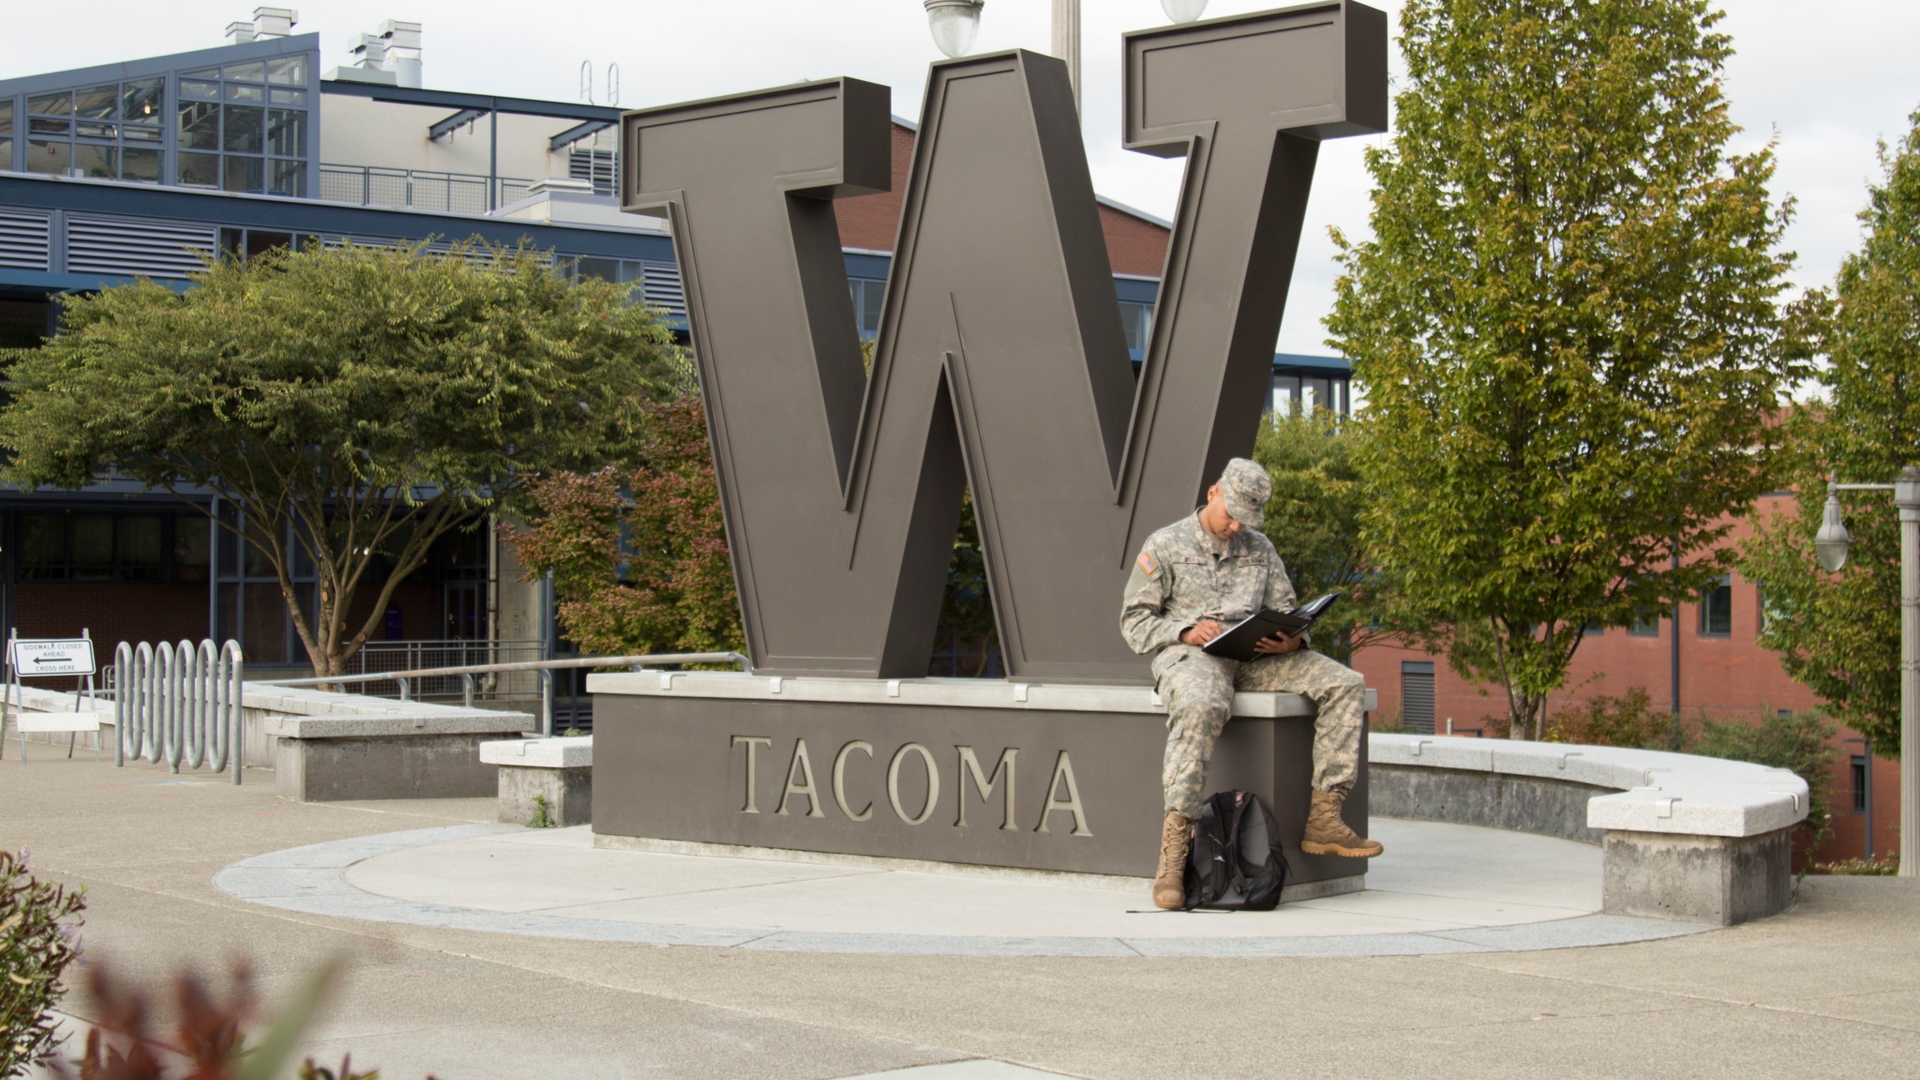 Community - UW Tacoma Initiatives